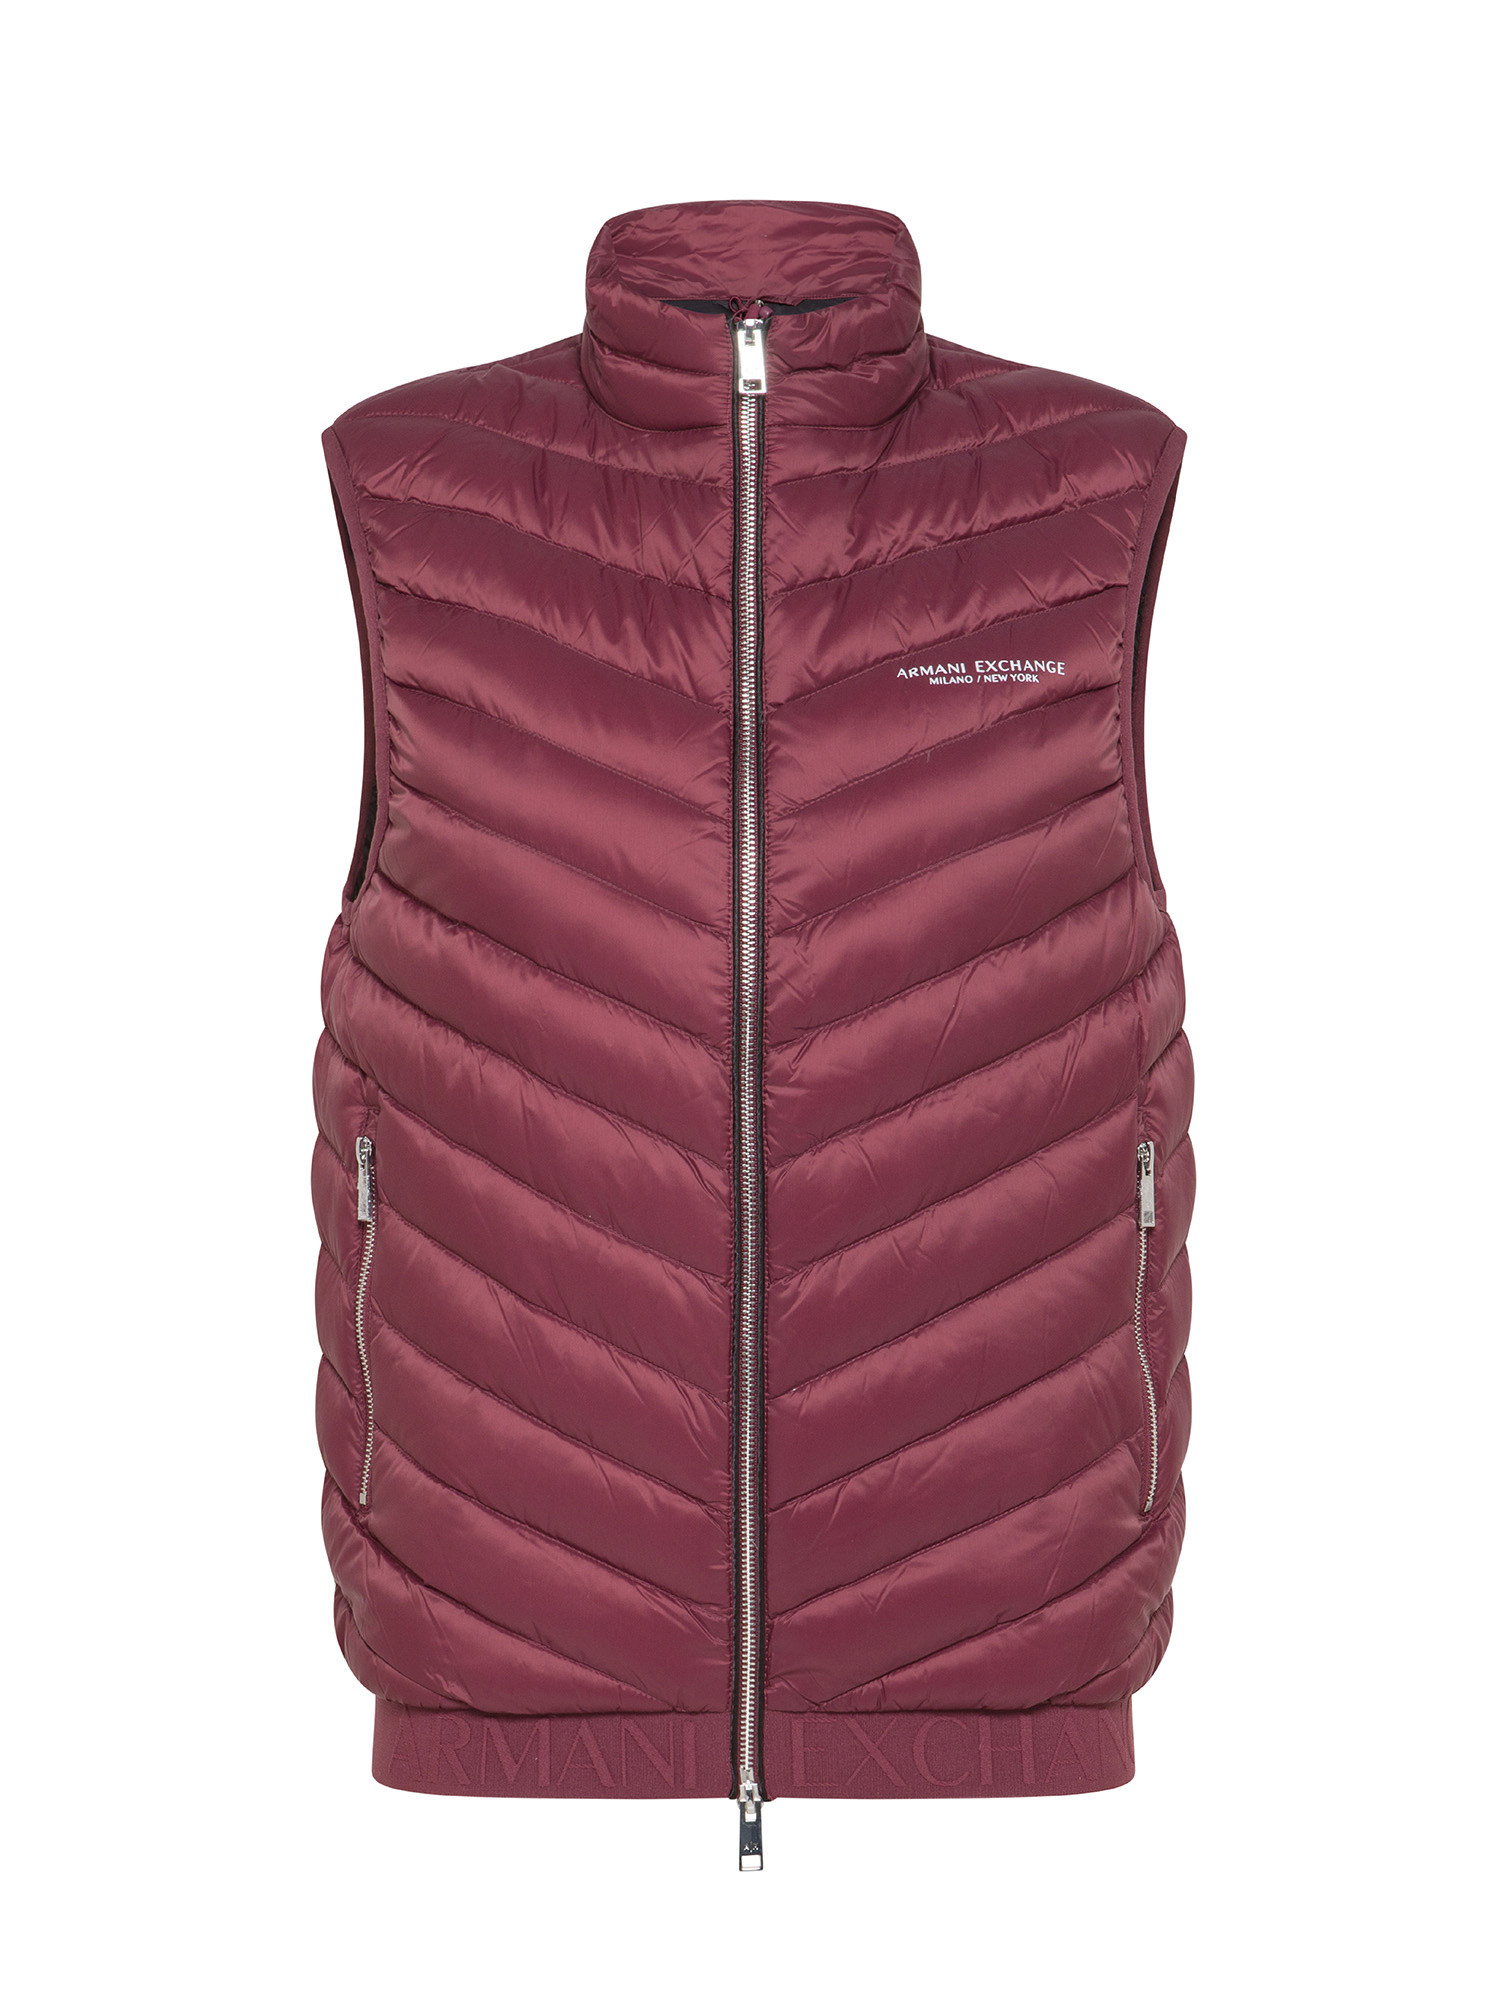 Armani Exchange - Padded sleeveless down jacket, Red Bordeaux, large image number 0